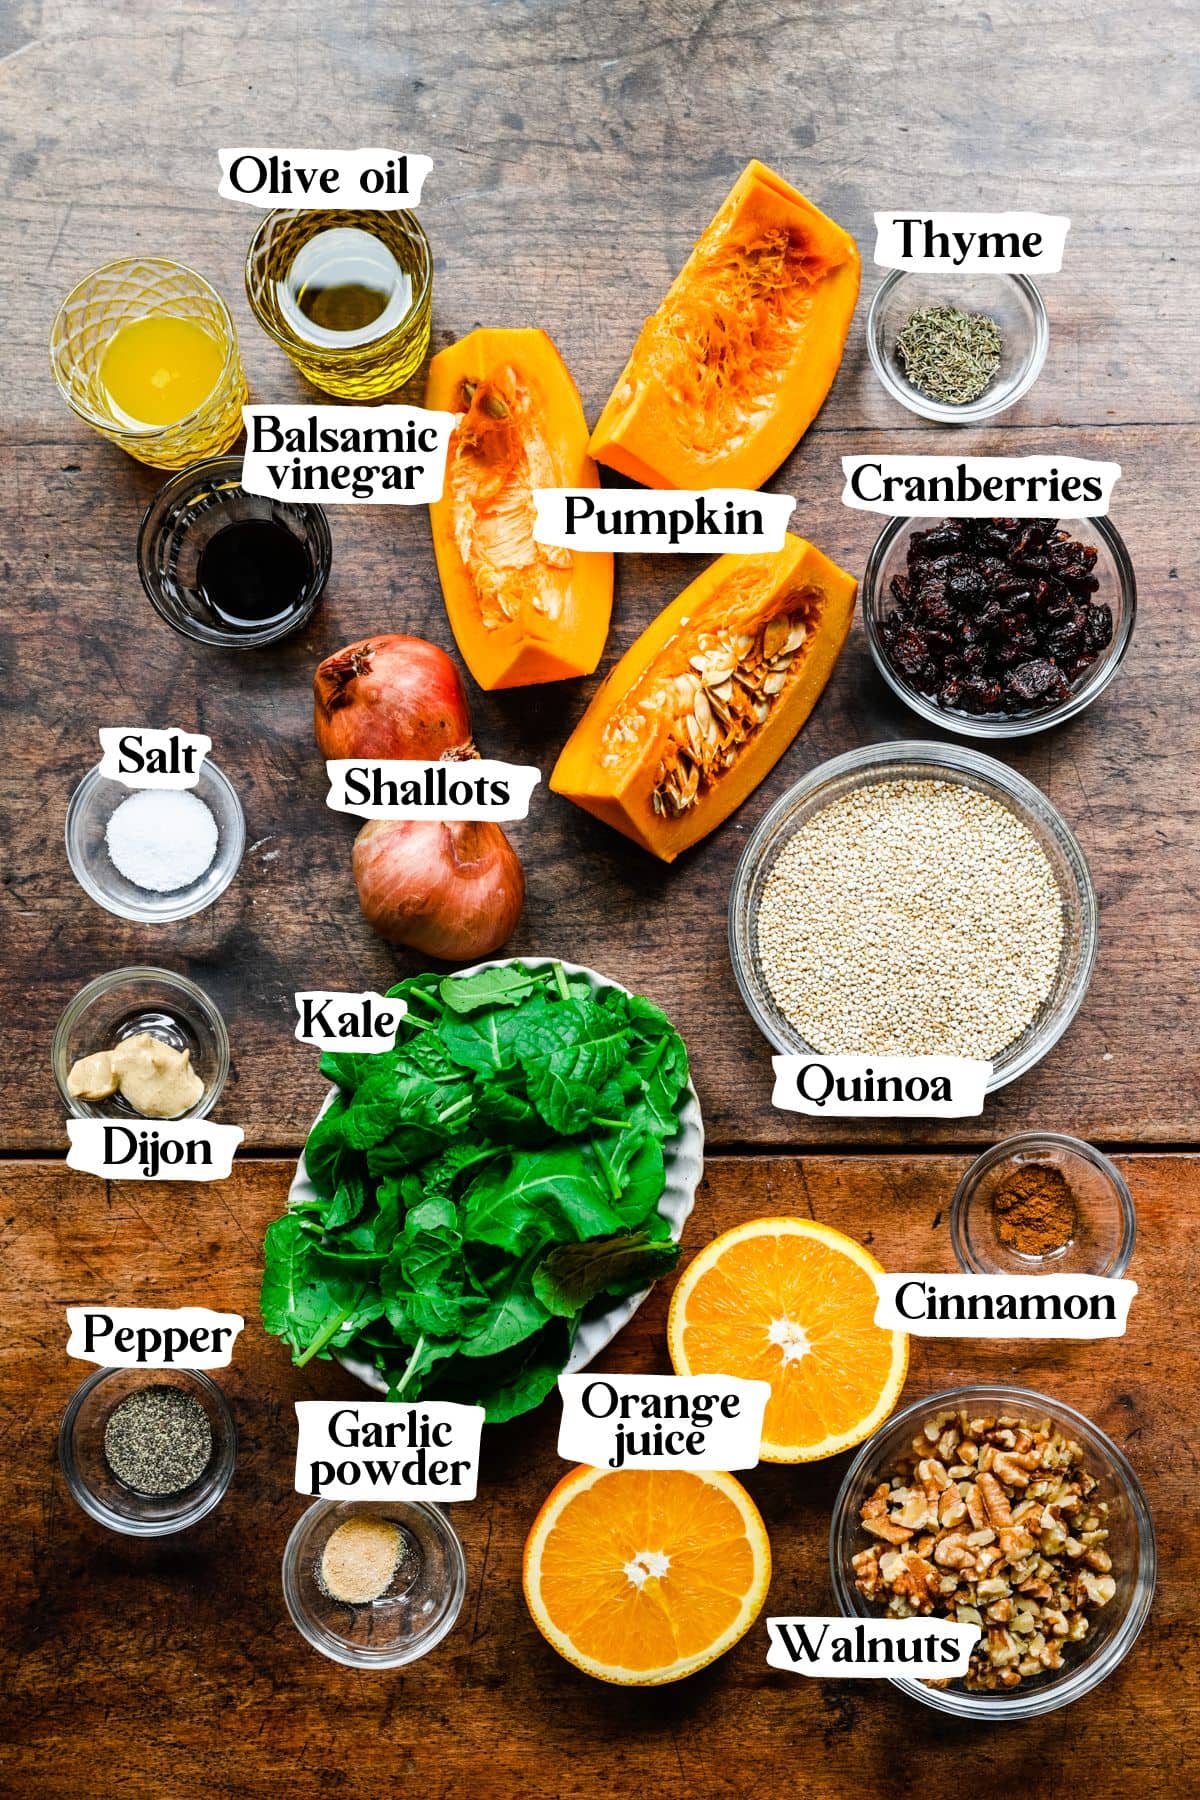 Pumpkin salad ingredients including quinoa, kale, and shallots.